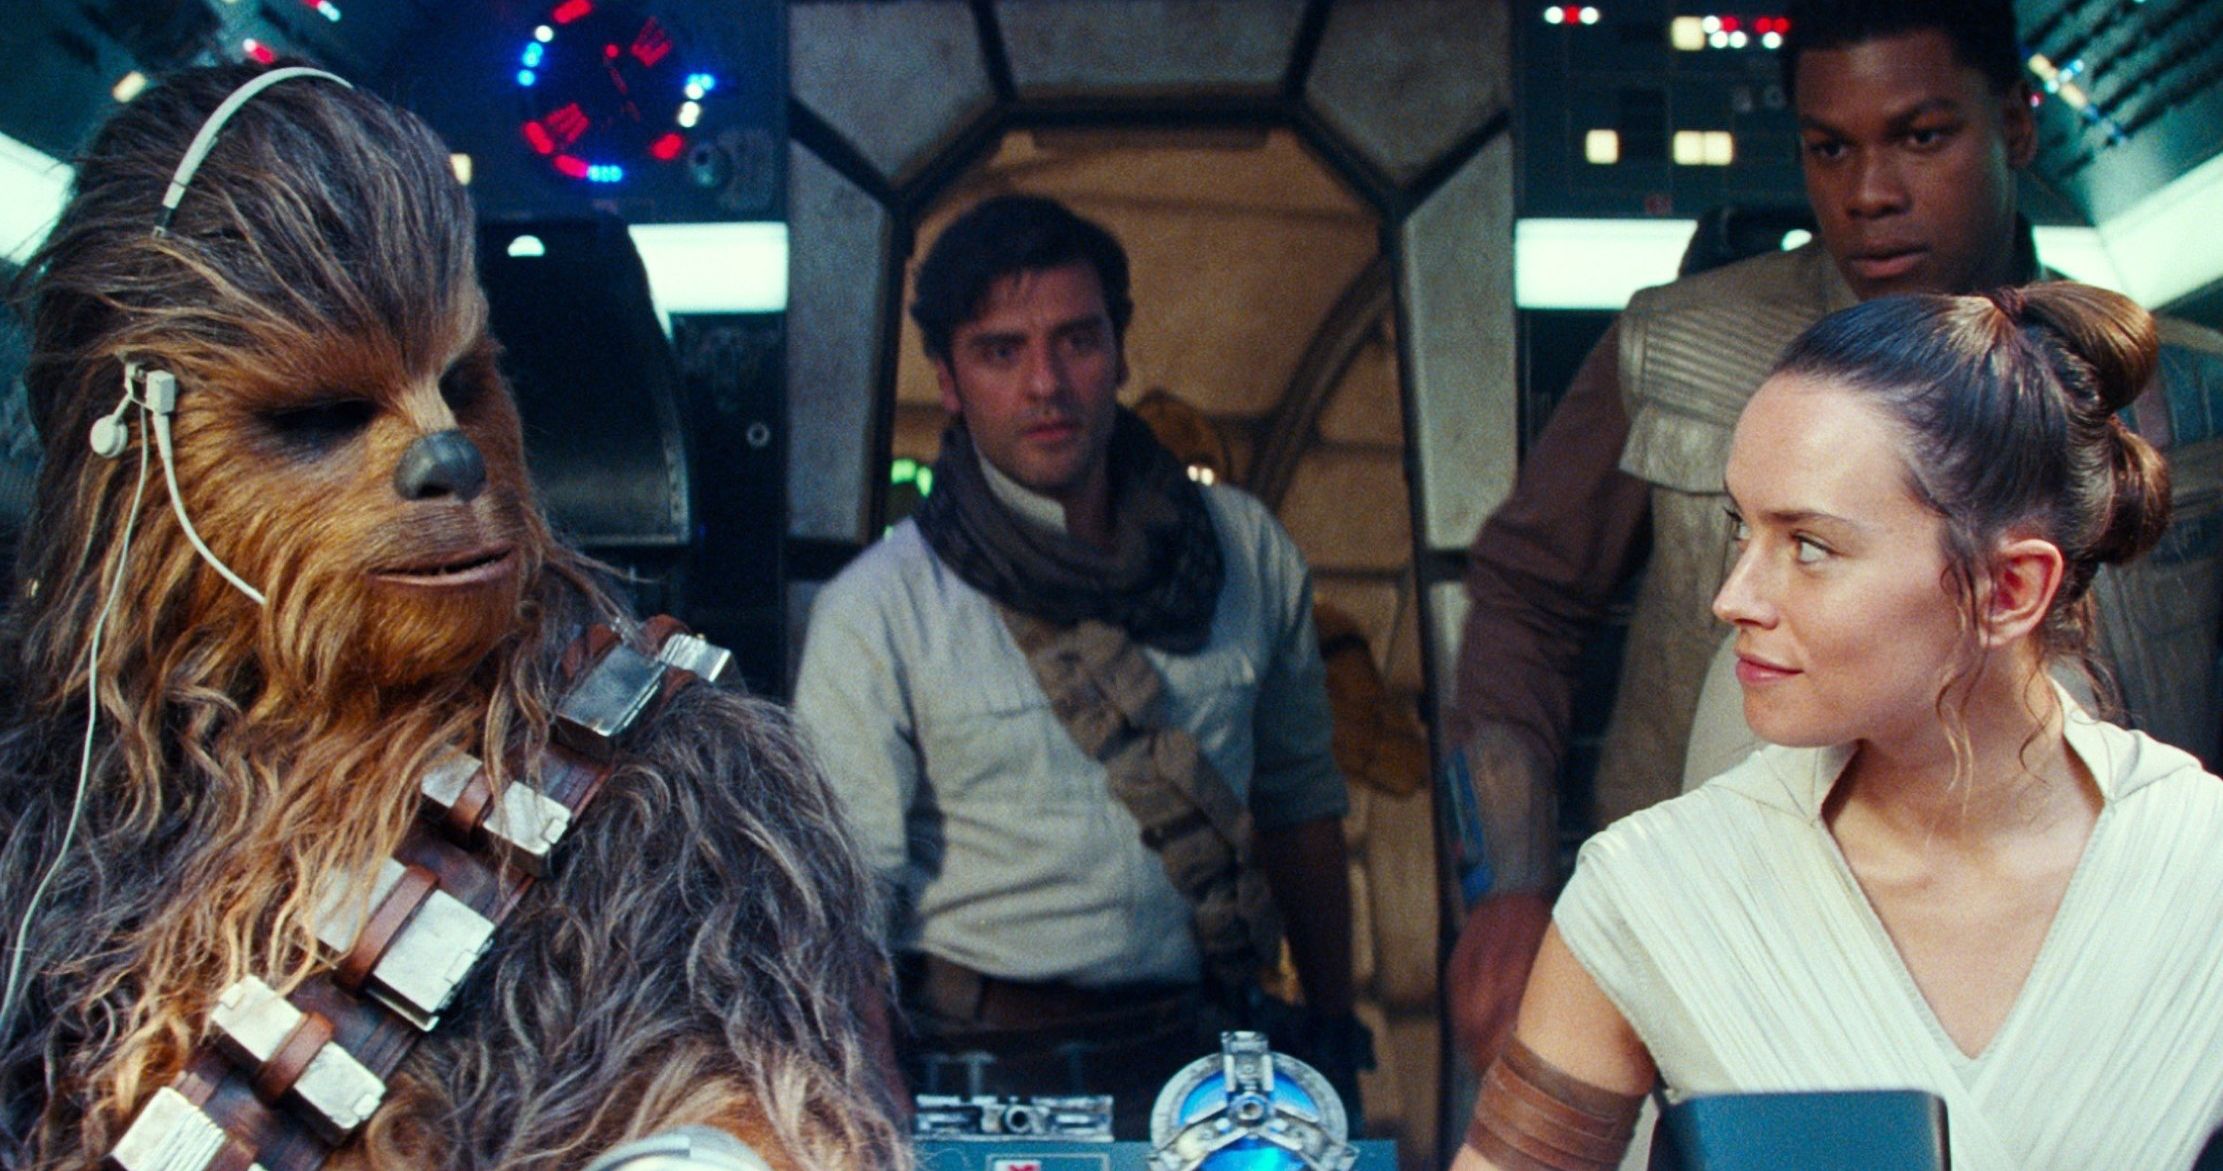 Bad Star Wars 9 Reviews Cause Box Office Estimates to Drop